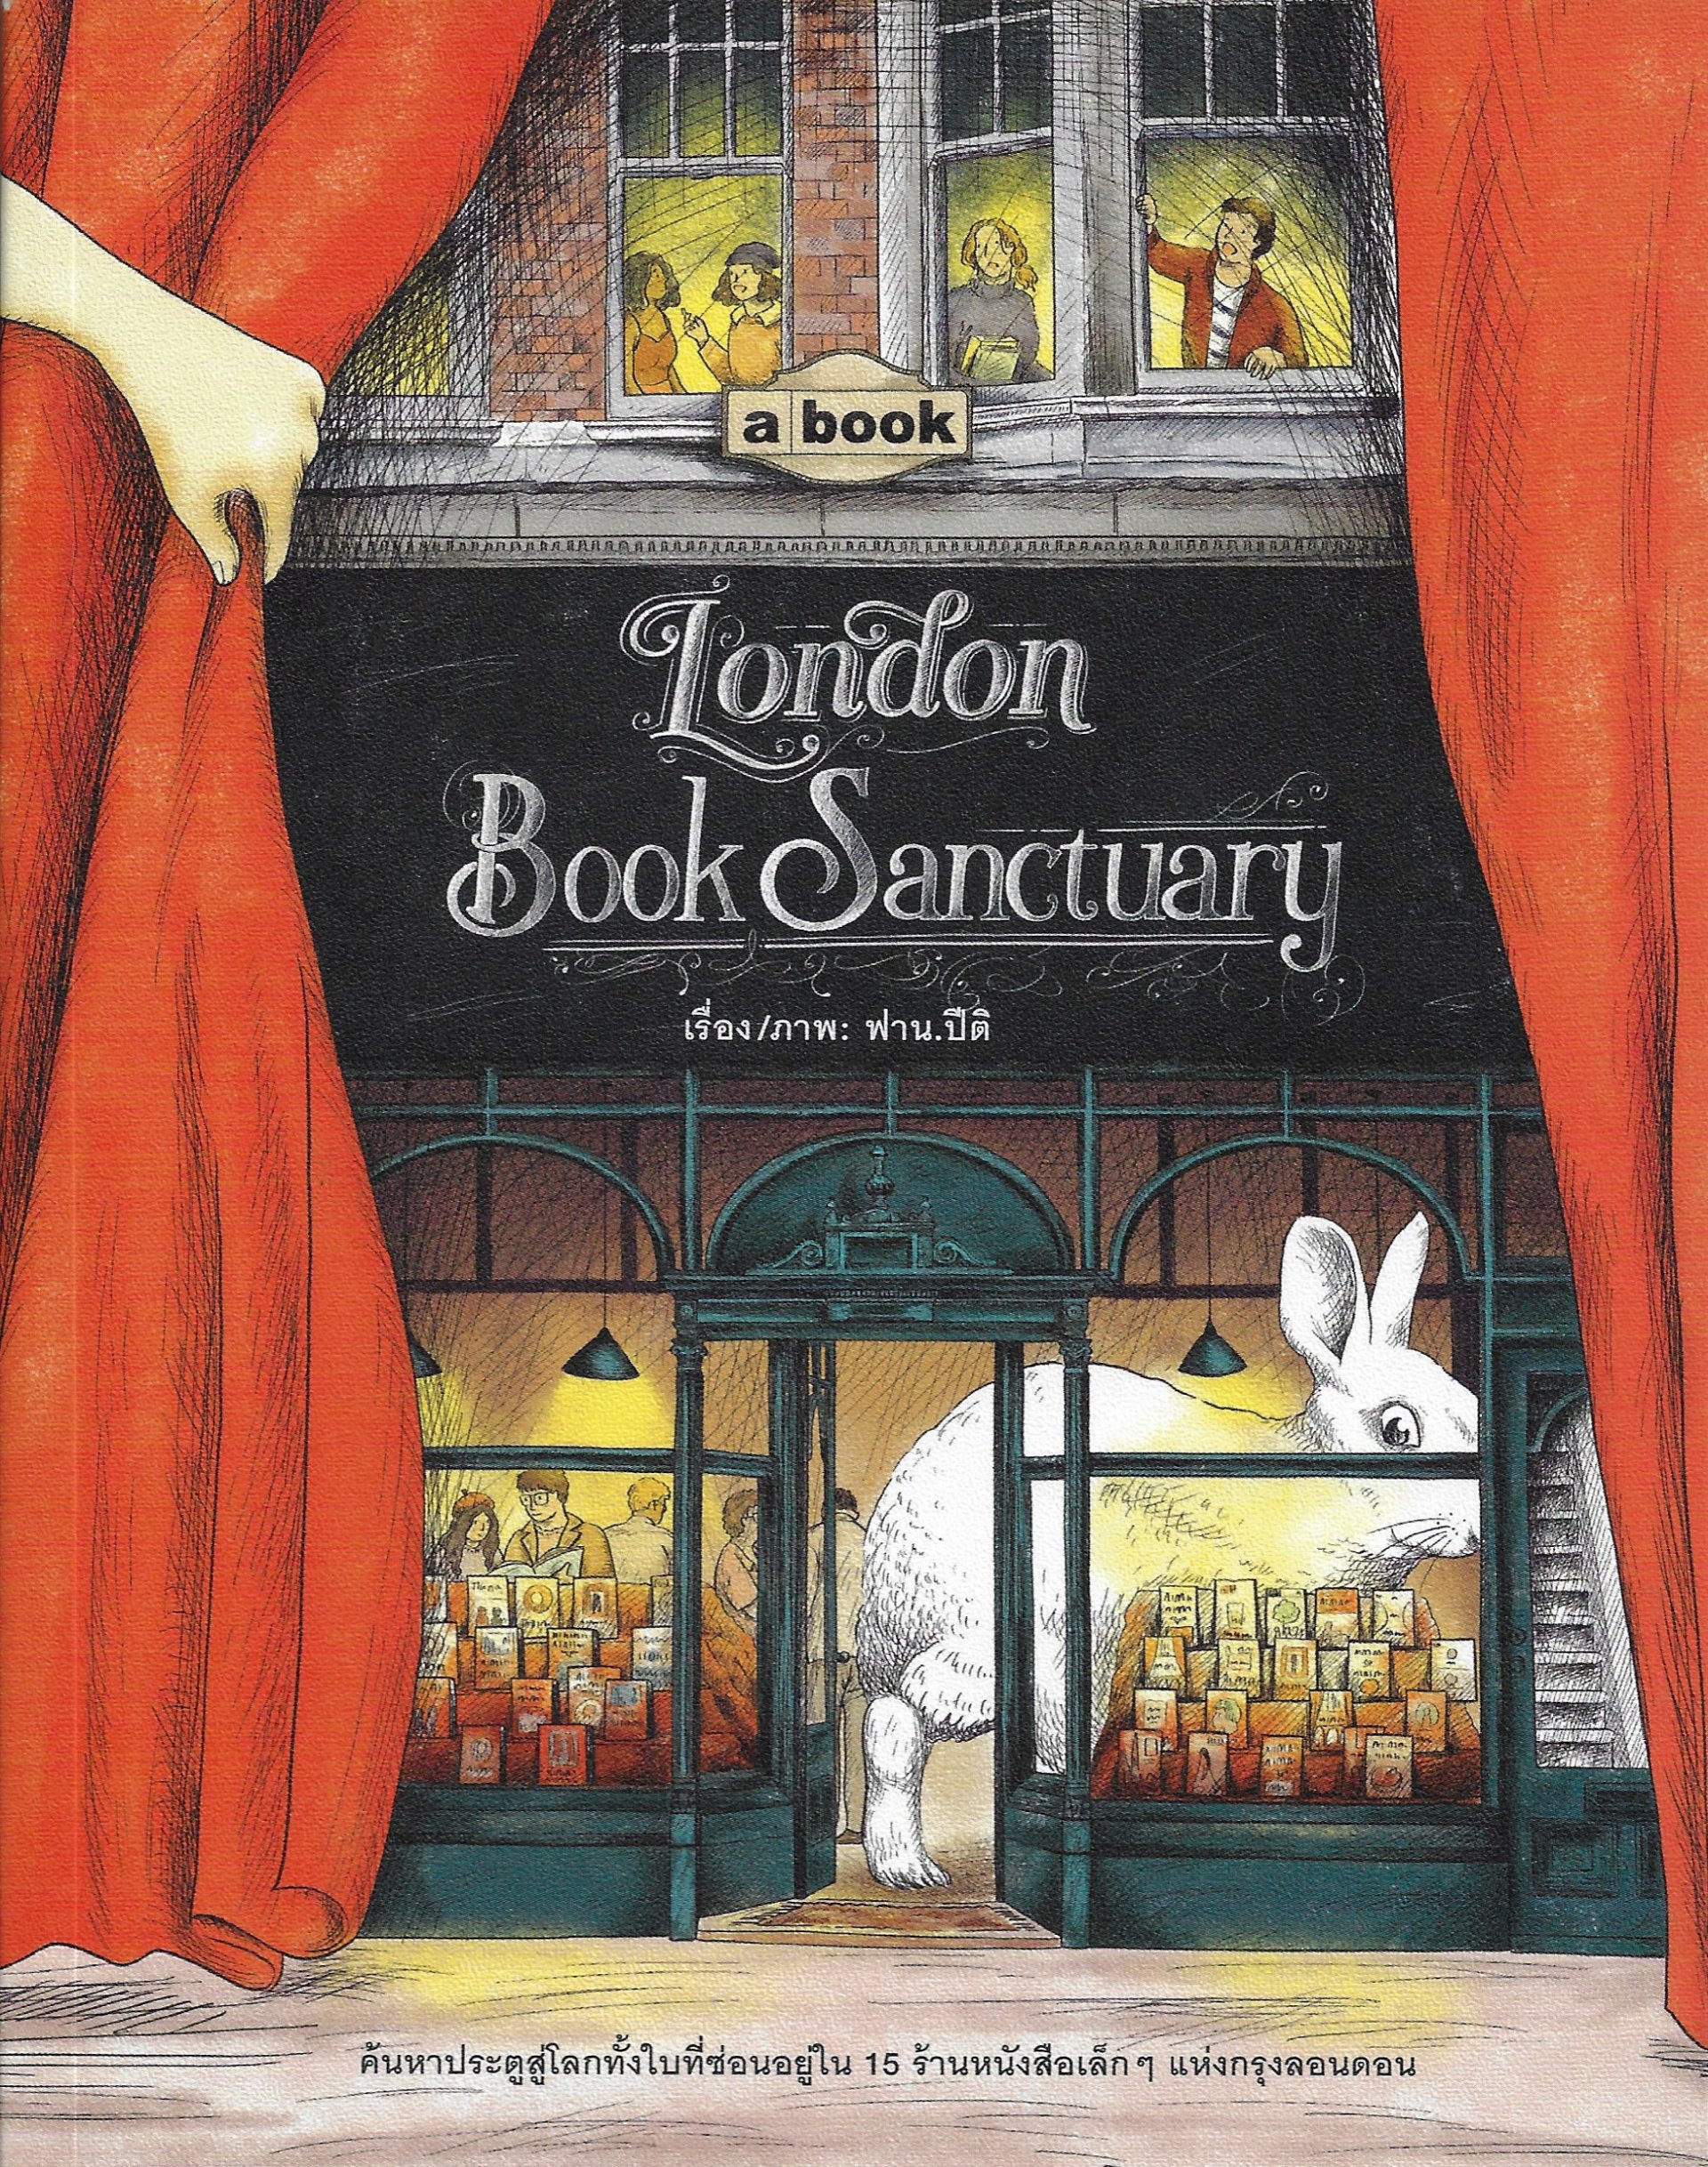 London Book Sanctuary / ฟาน.ปีติ / a book